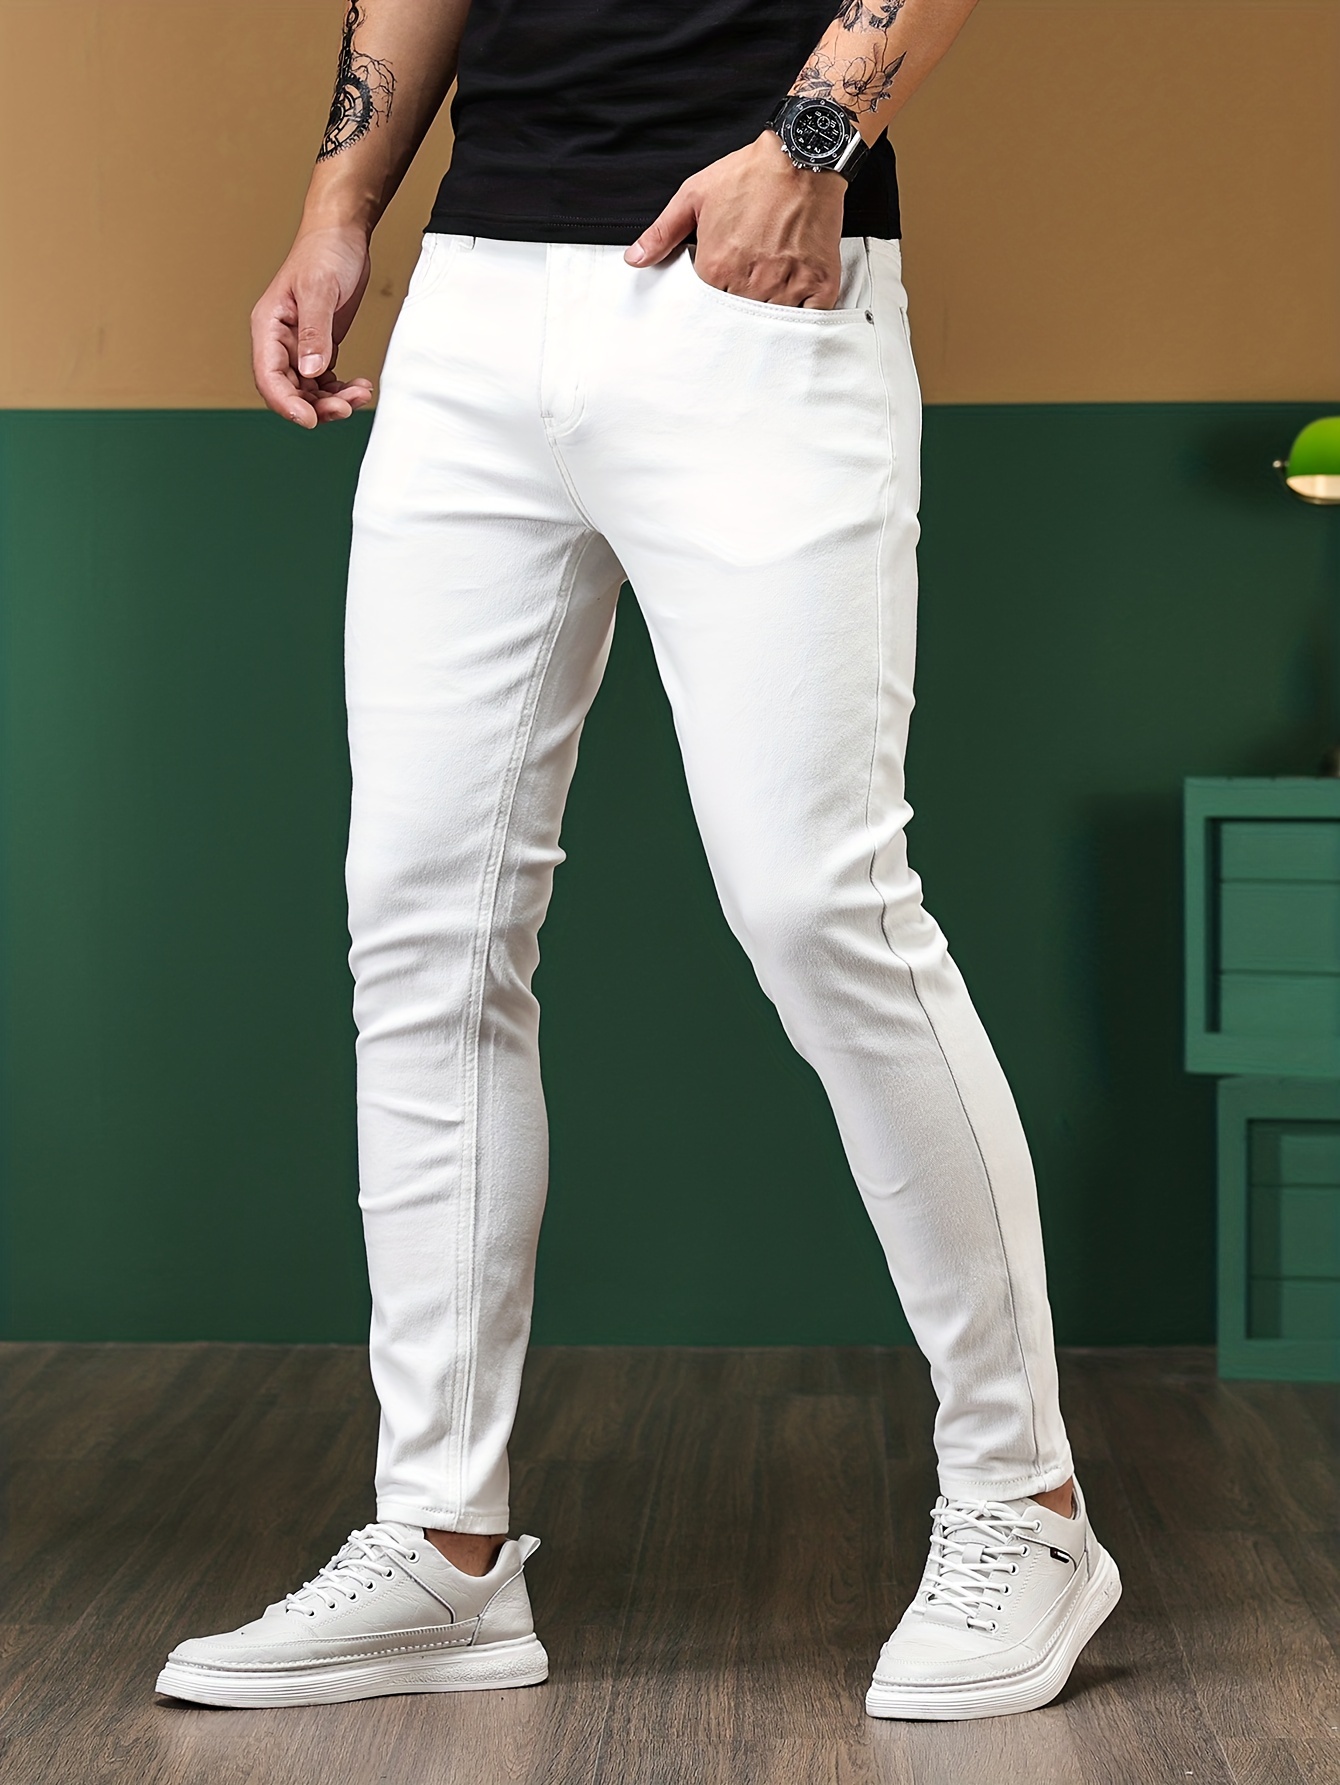 Men's White Trousers, Explore our New Arrivals